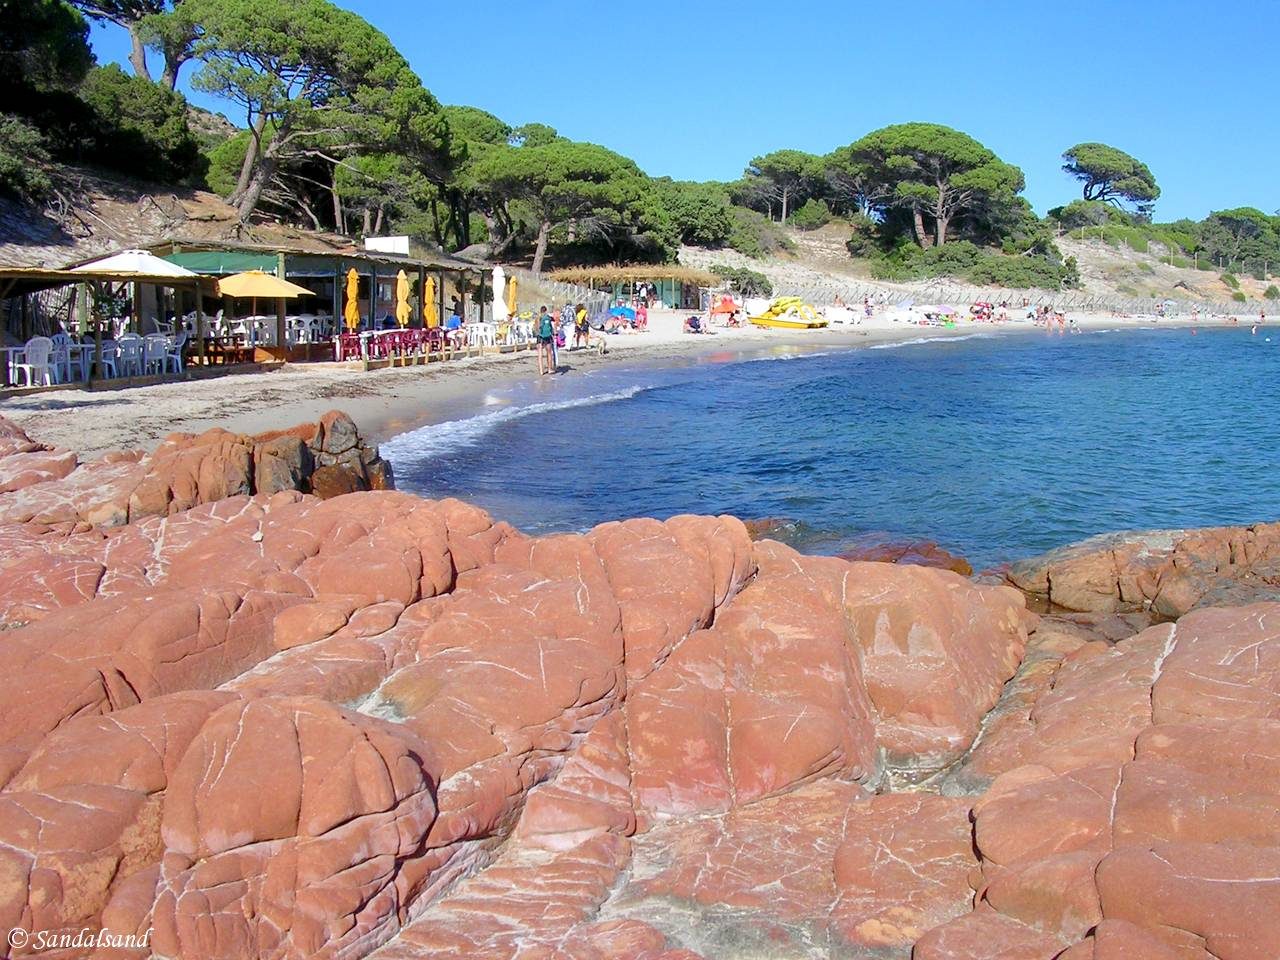 France - Corsica - Palombaggia beach